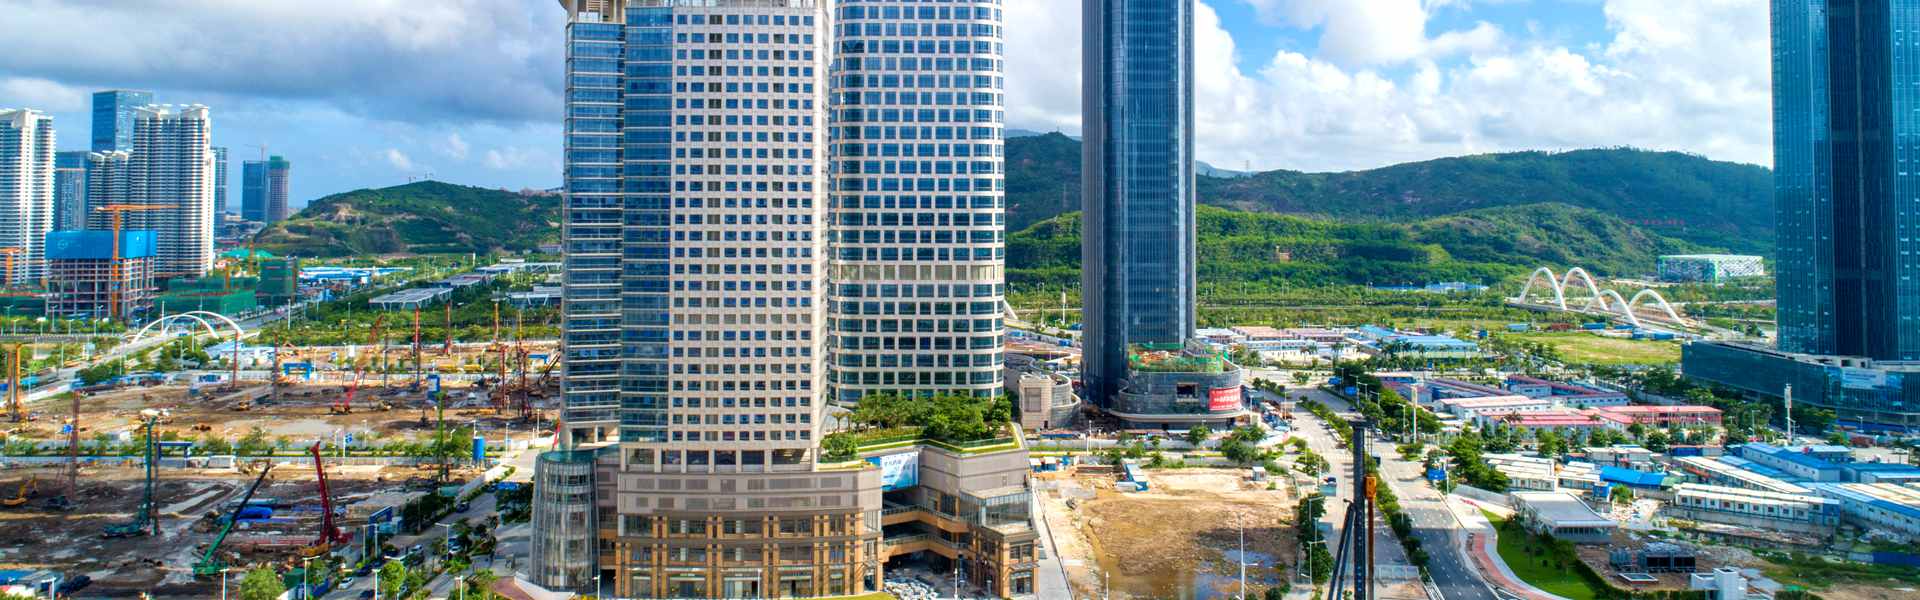 Zhongda Construction (China)：Steel Corridors for 43 Floors (182.3m) Financial Towers